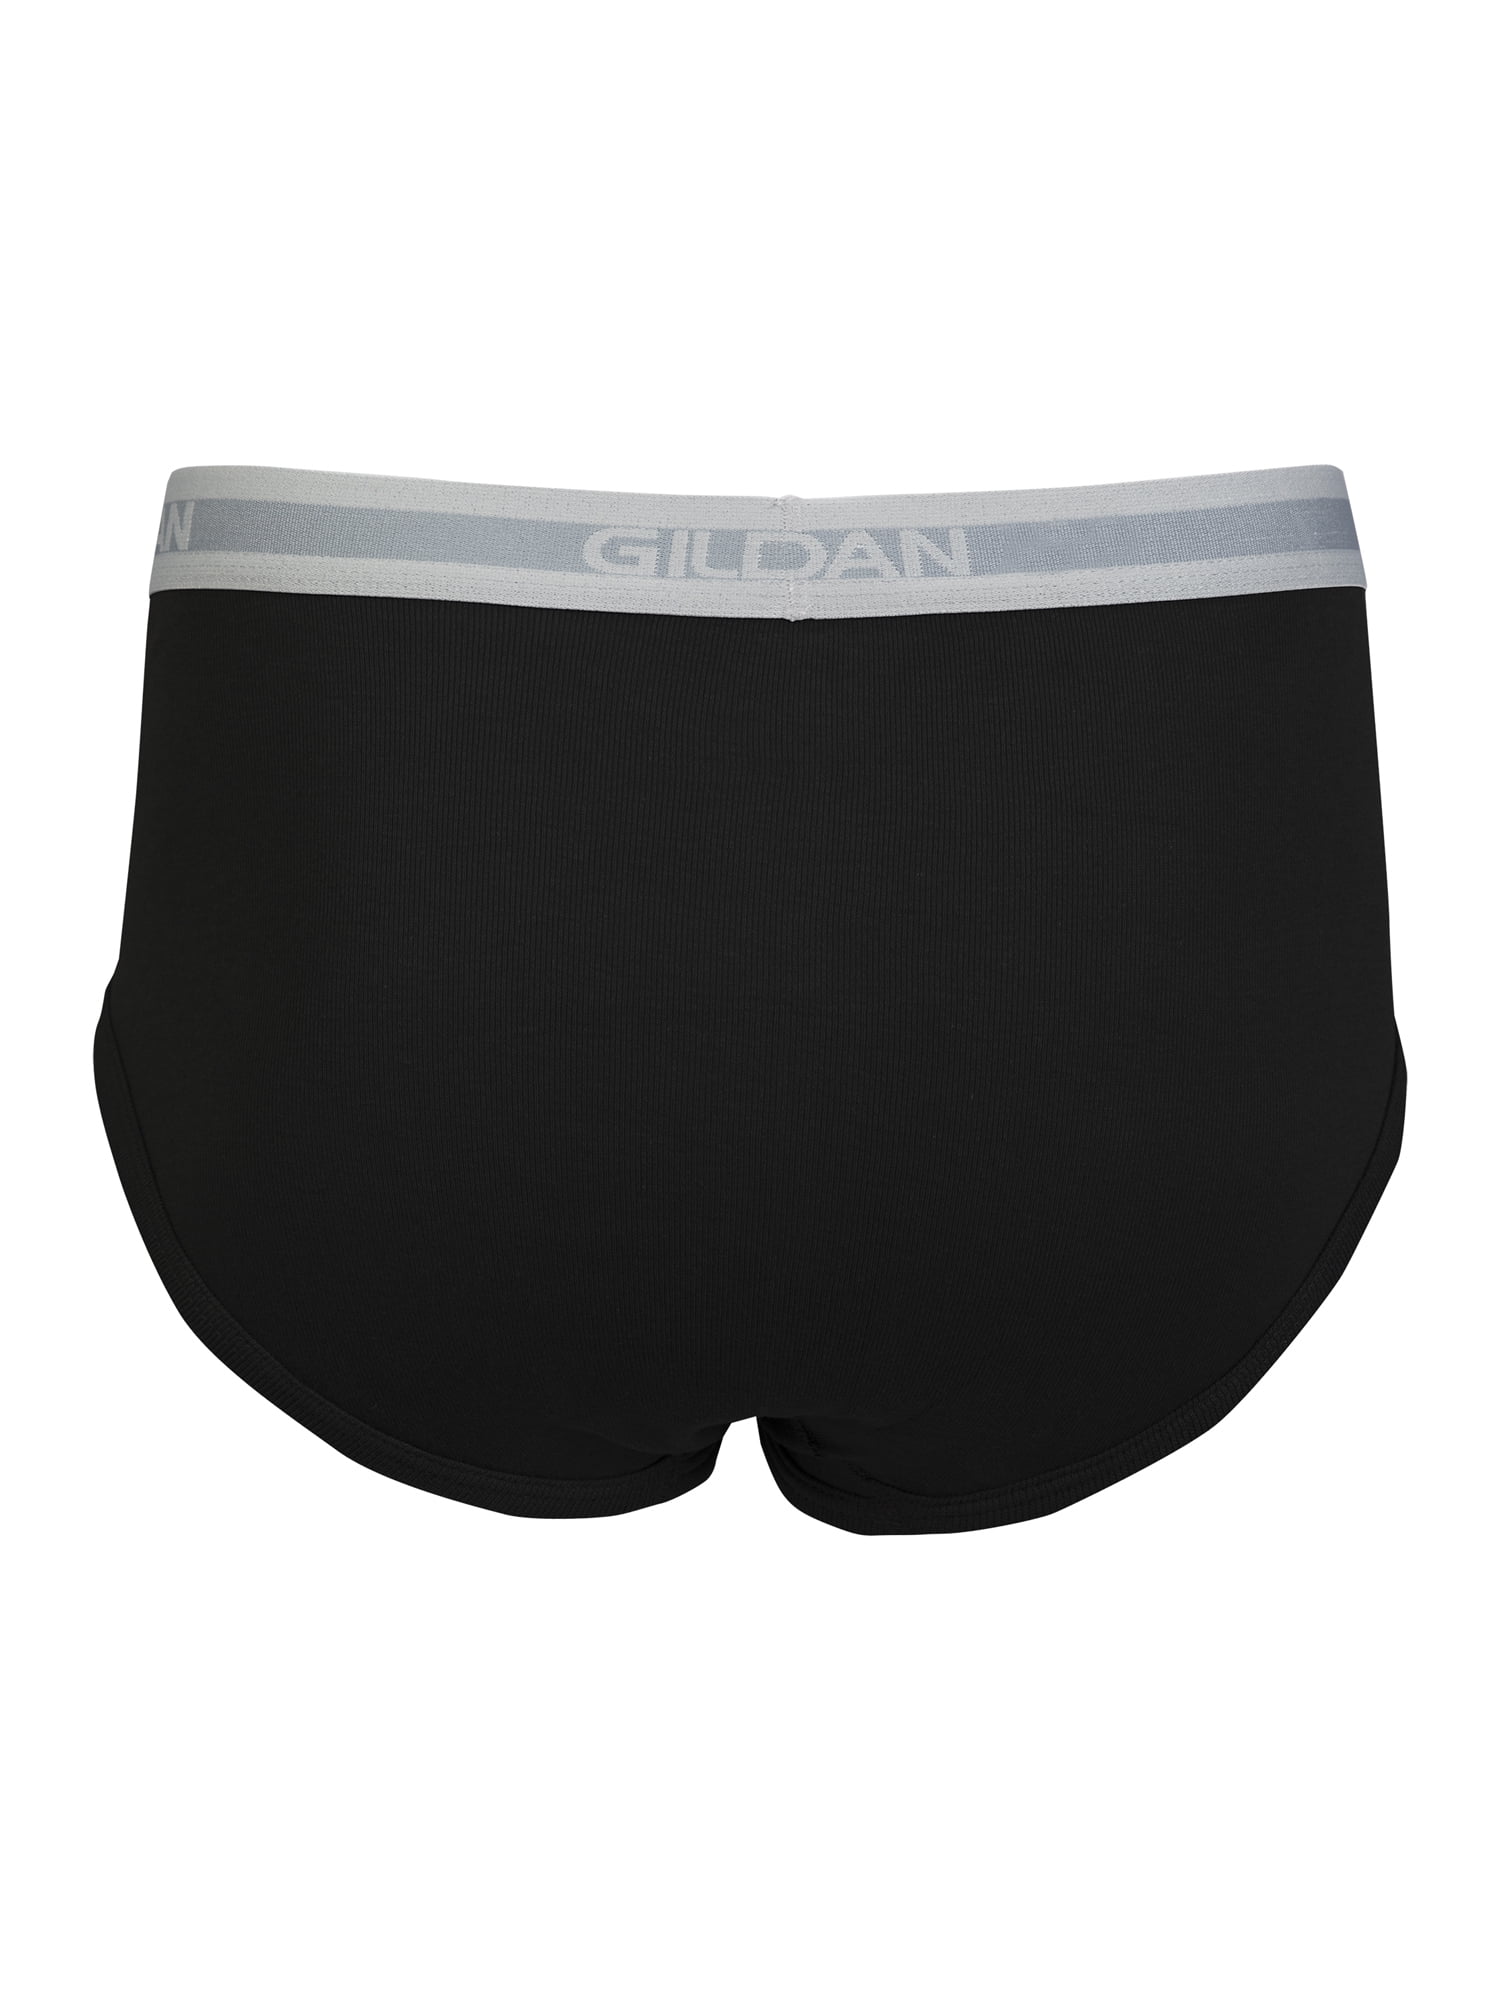  Gildan Mens Underwear Boxers, Multipack, Black Stripe  Assorted